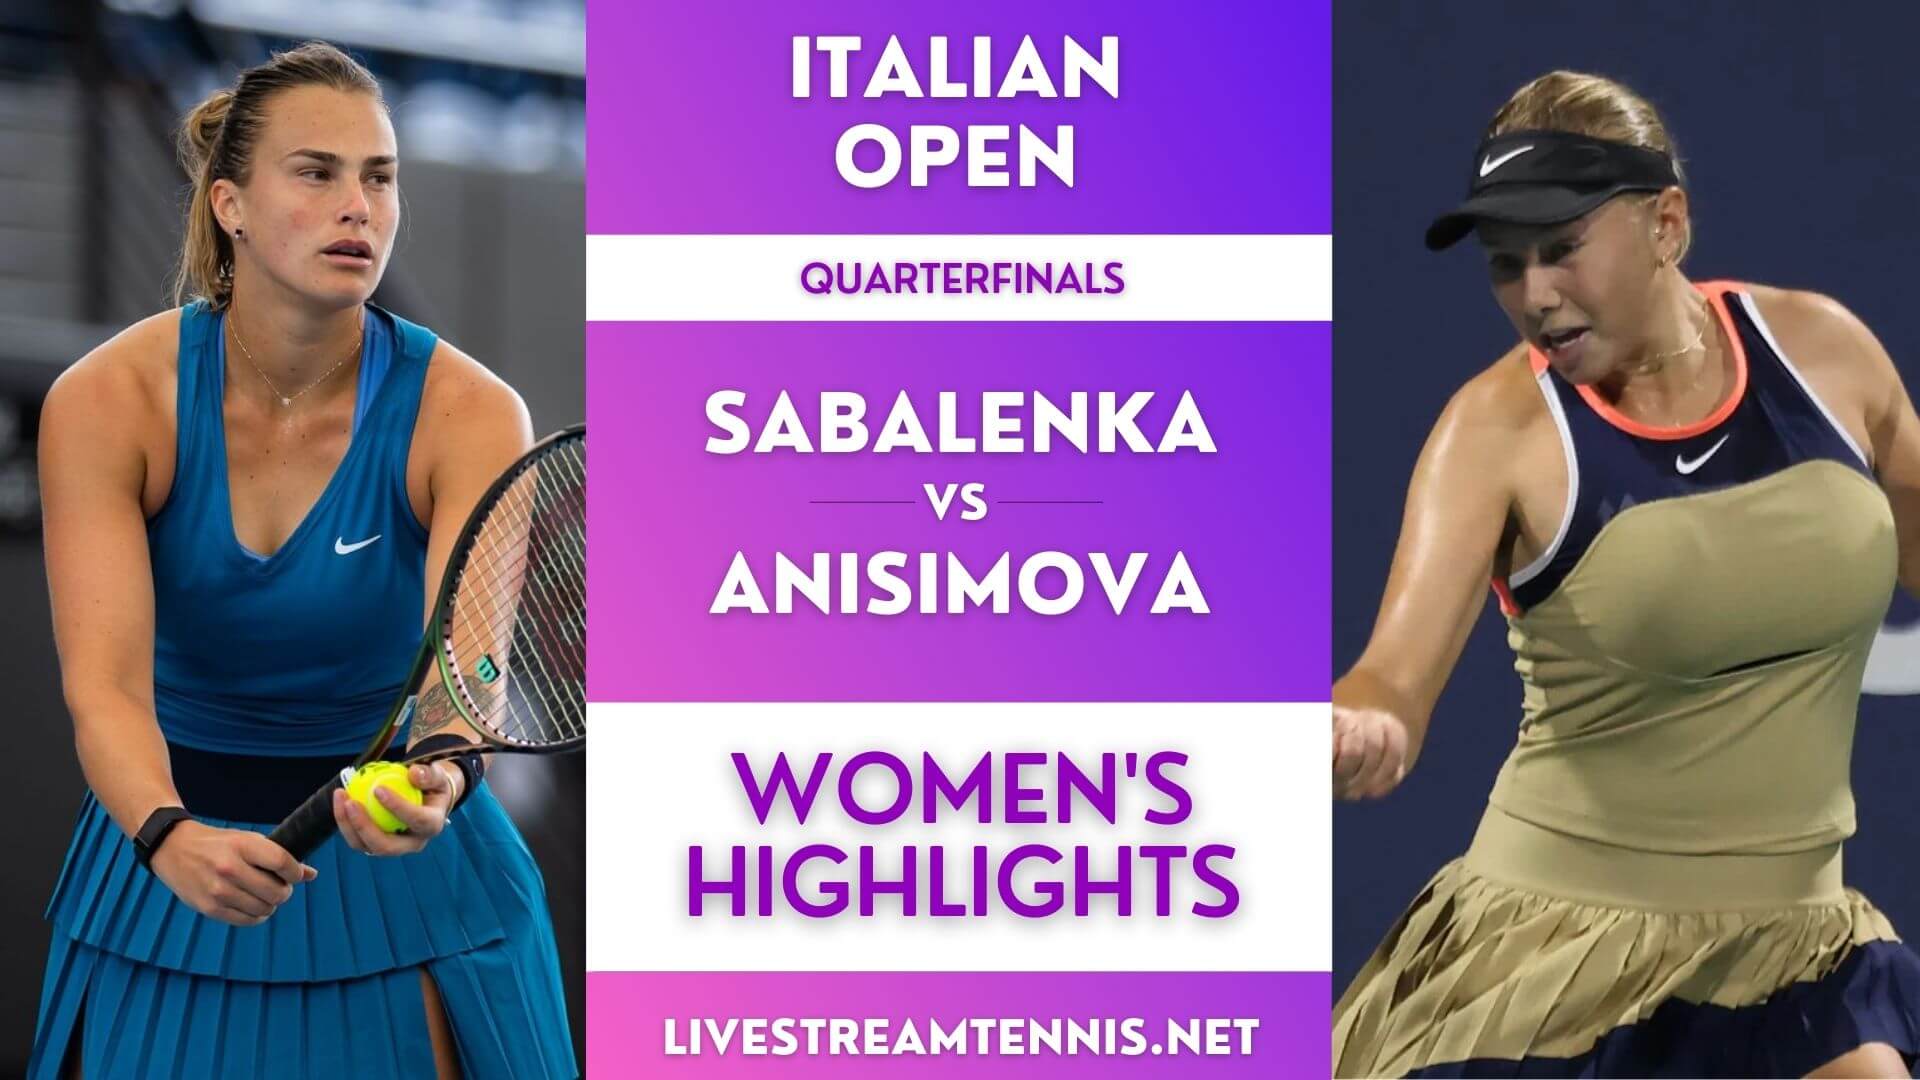 Italian Open Ladies Quarterfinal 4 Highlights 2022